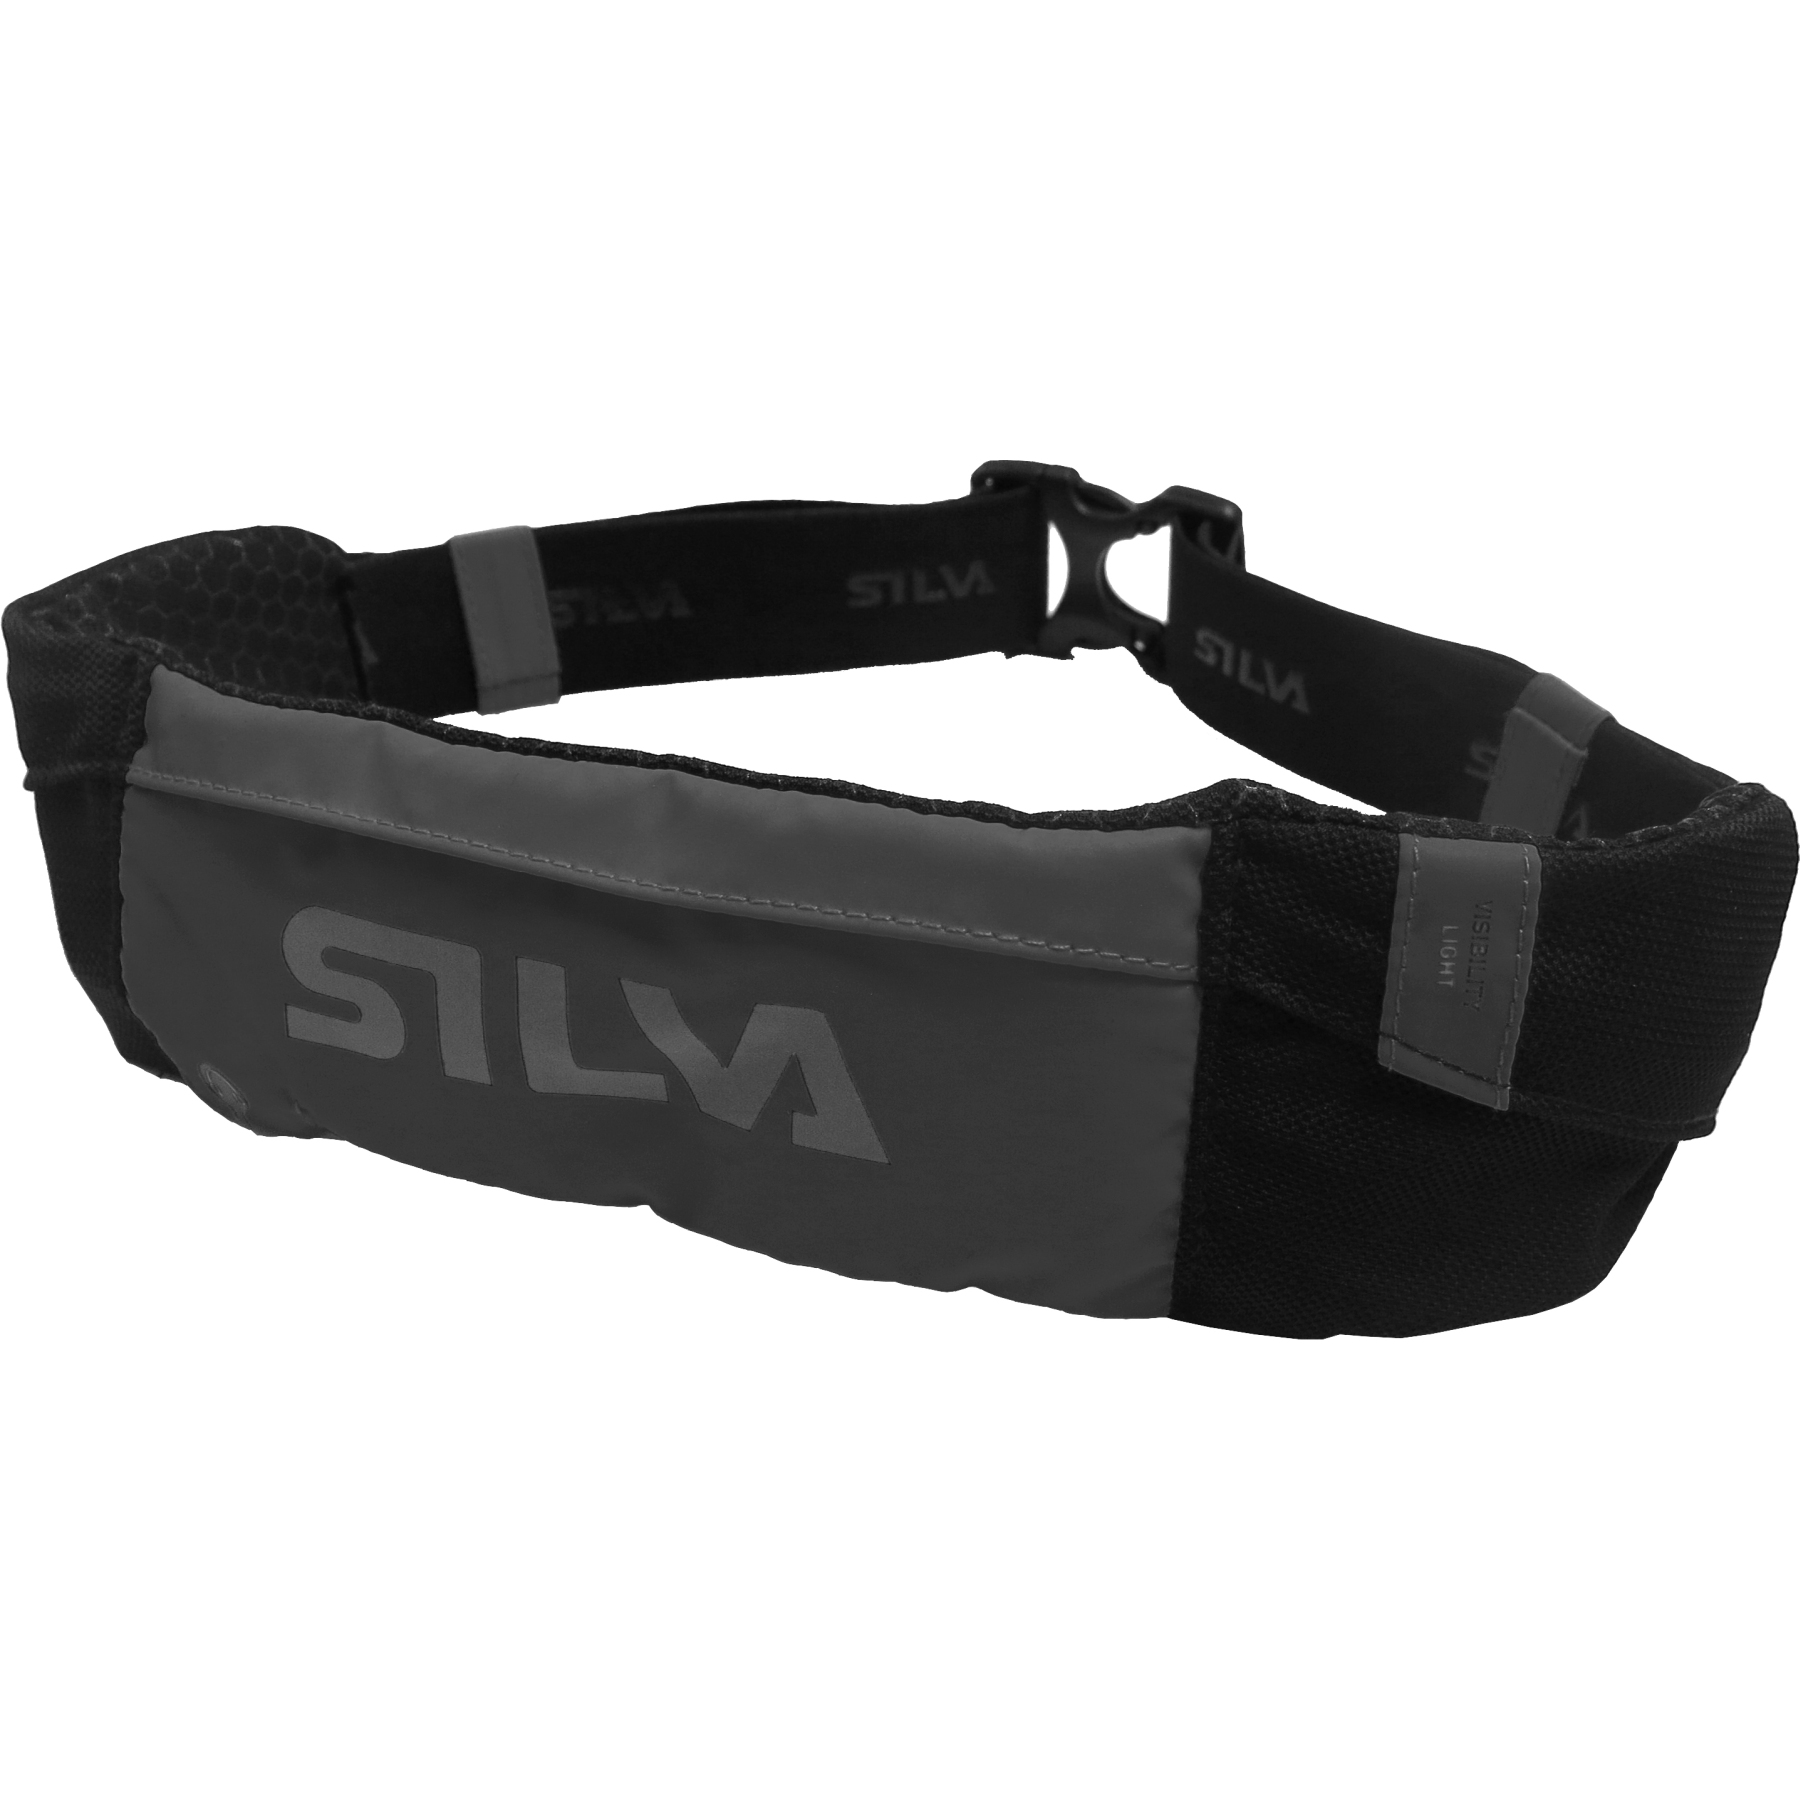 Productfoto van Silva Strive Belt - black